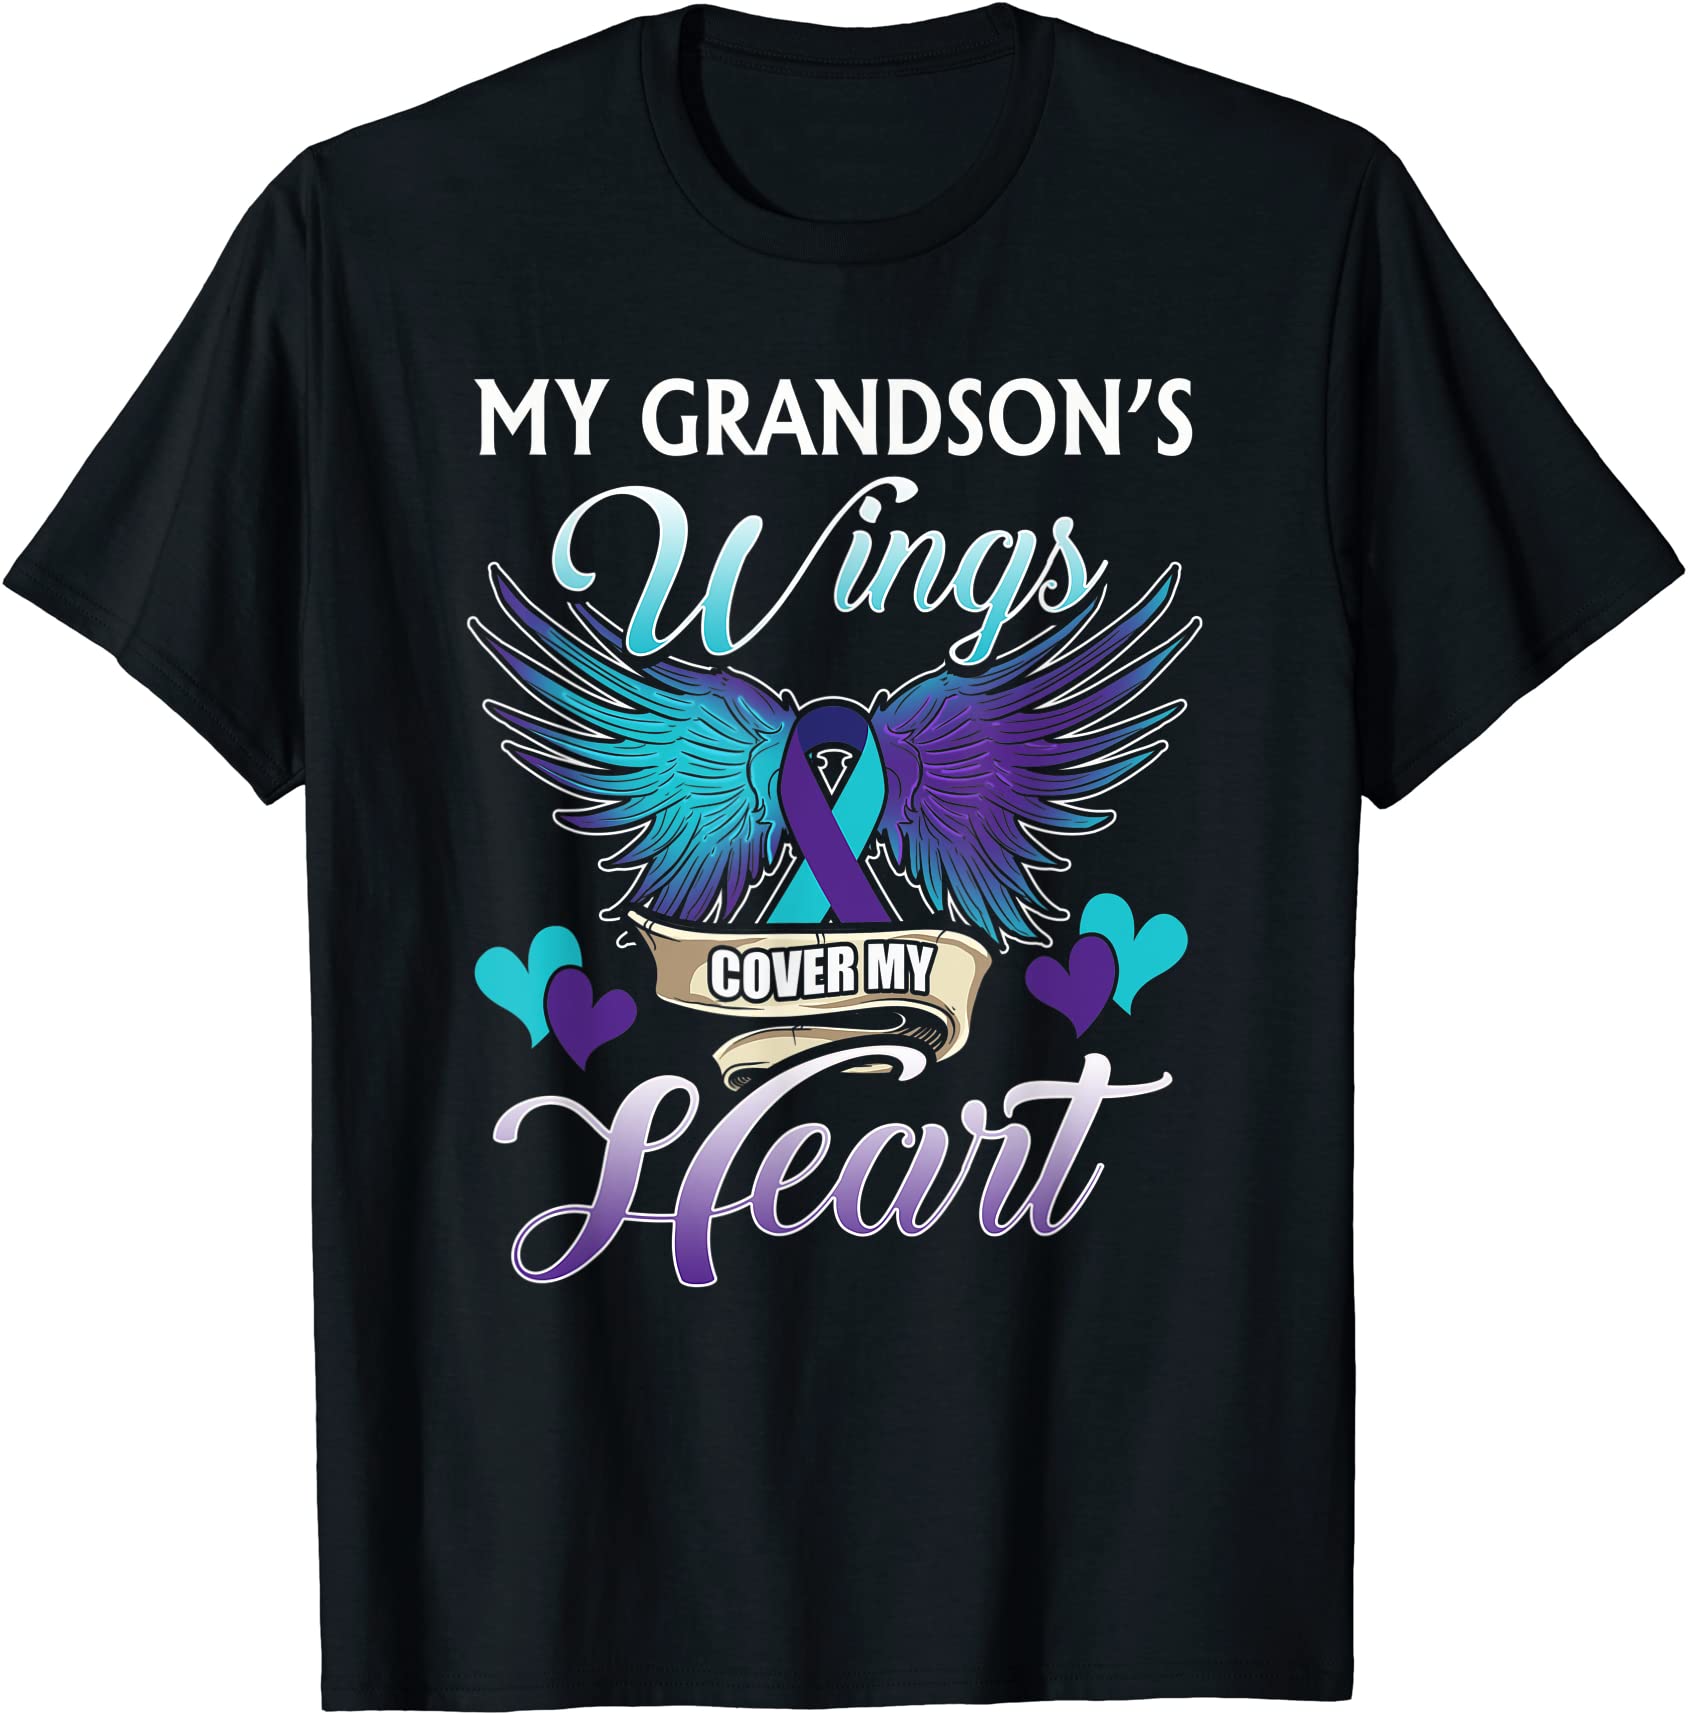 suicide memory of grandson wings cover heart t shirt men - Buy t-shirt ...